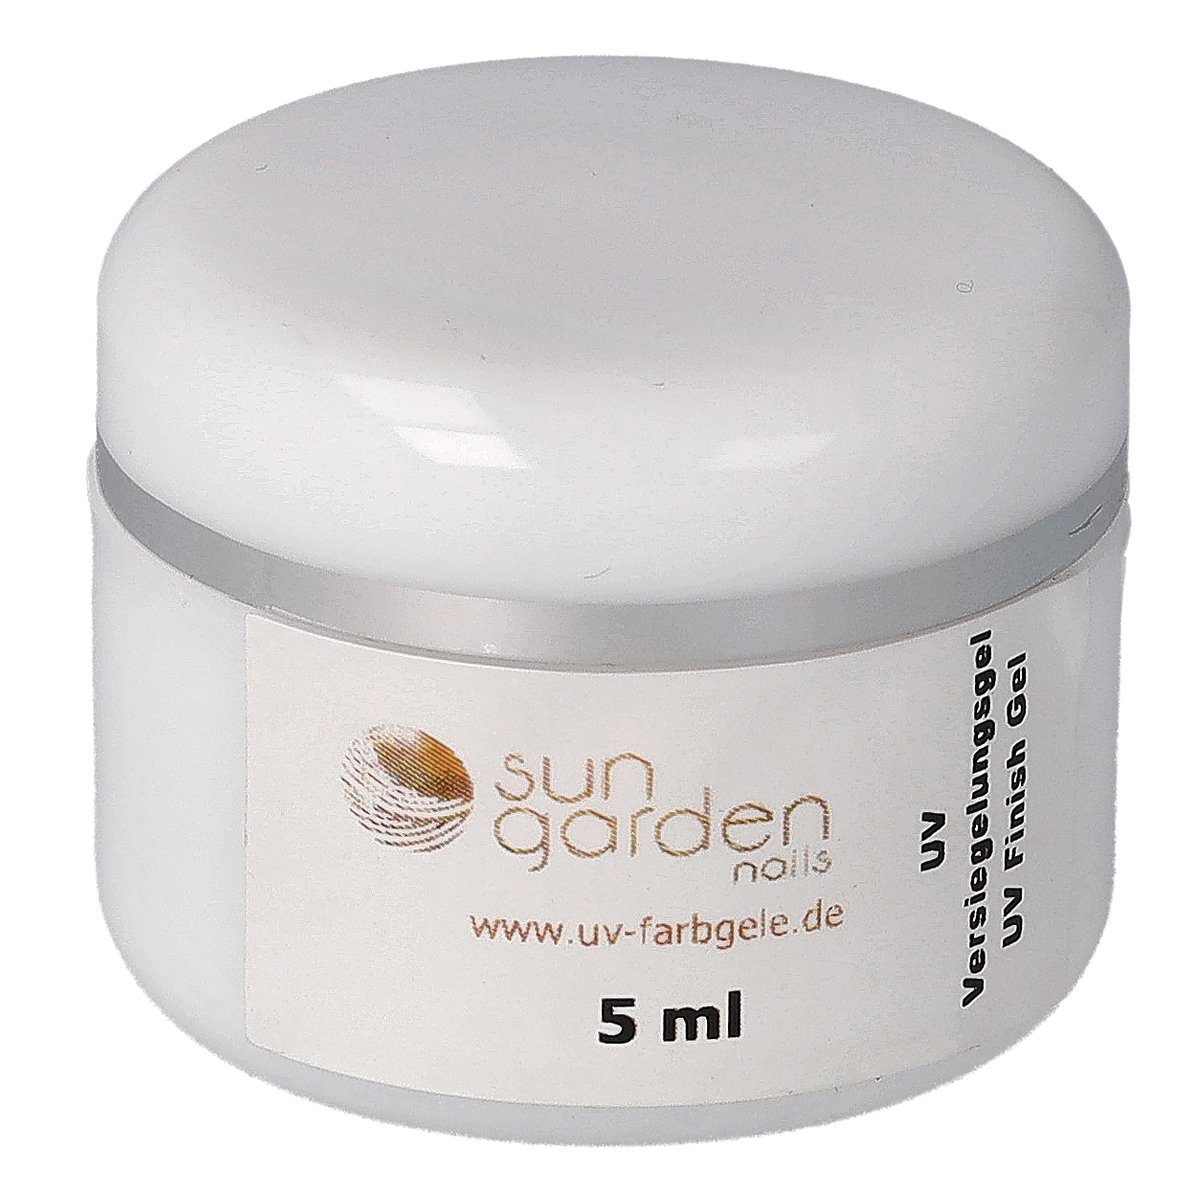 Gel 5 ml + Nails + 100 3 - Garden Classic Sun Finish Nagellack Cleaner Gel Pinselset UV tlg. Nail